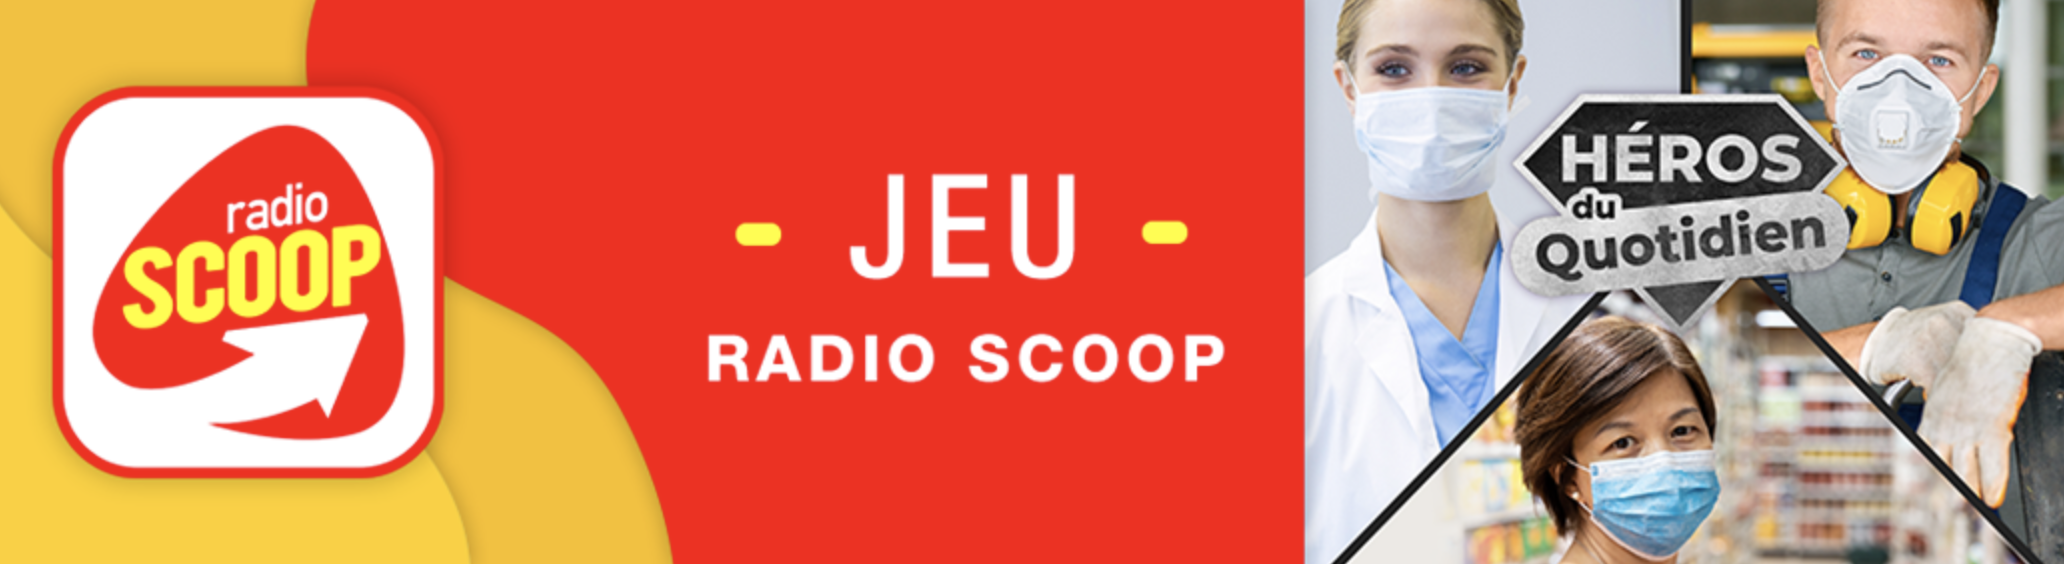 Covid-19 : Radio Scoop remercie les "Héros du quotidien"